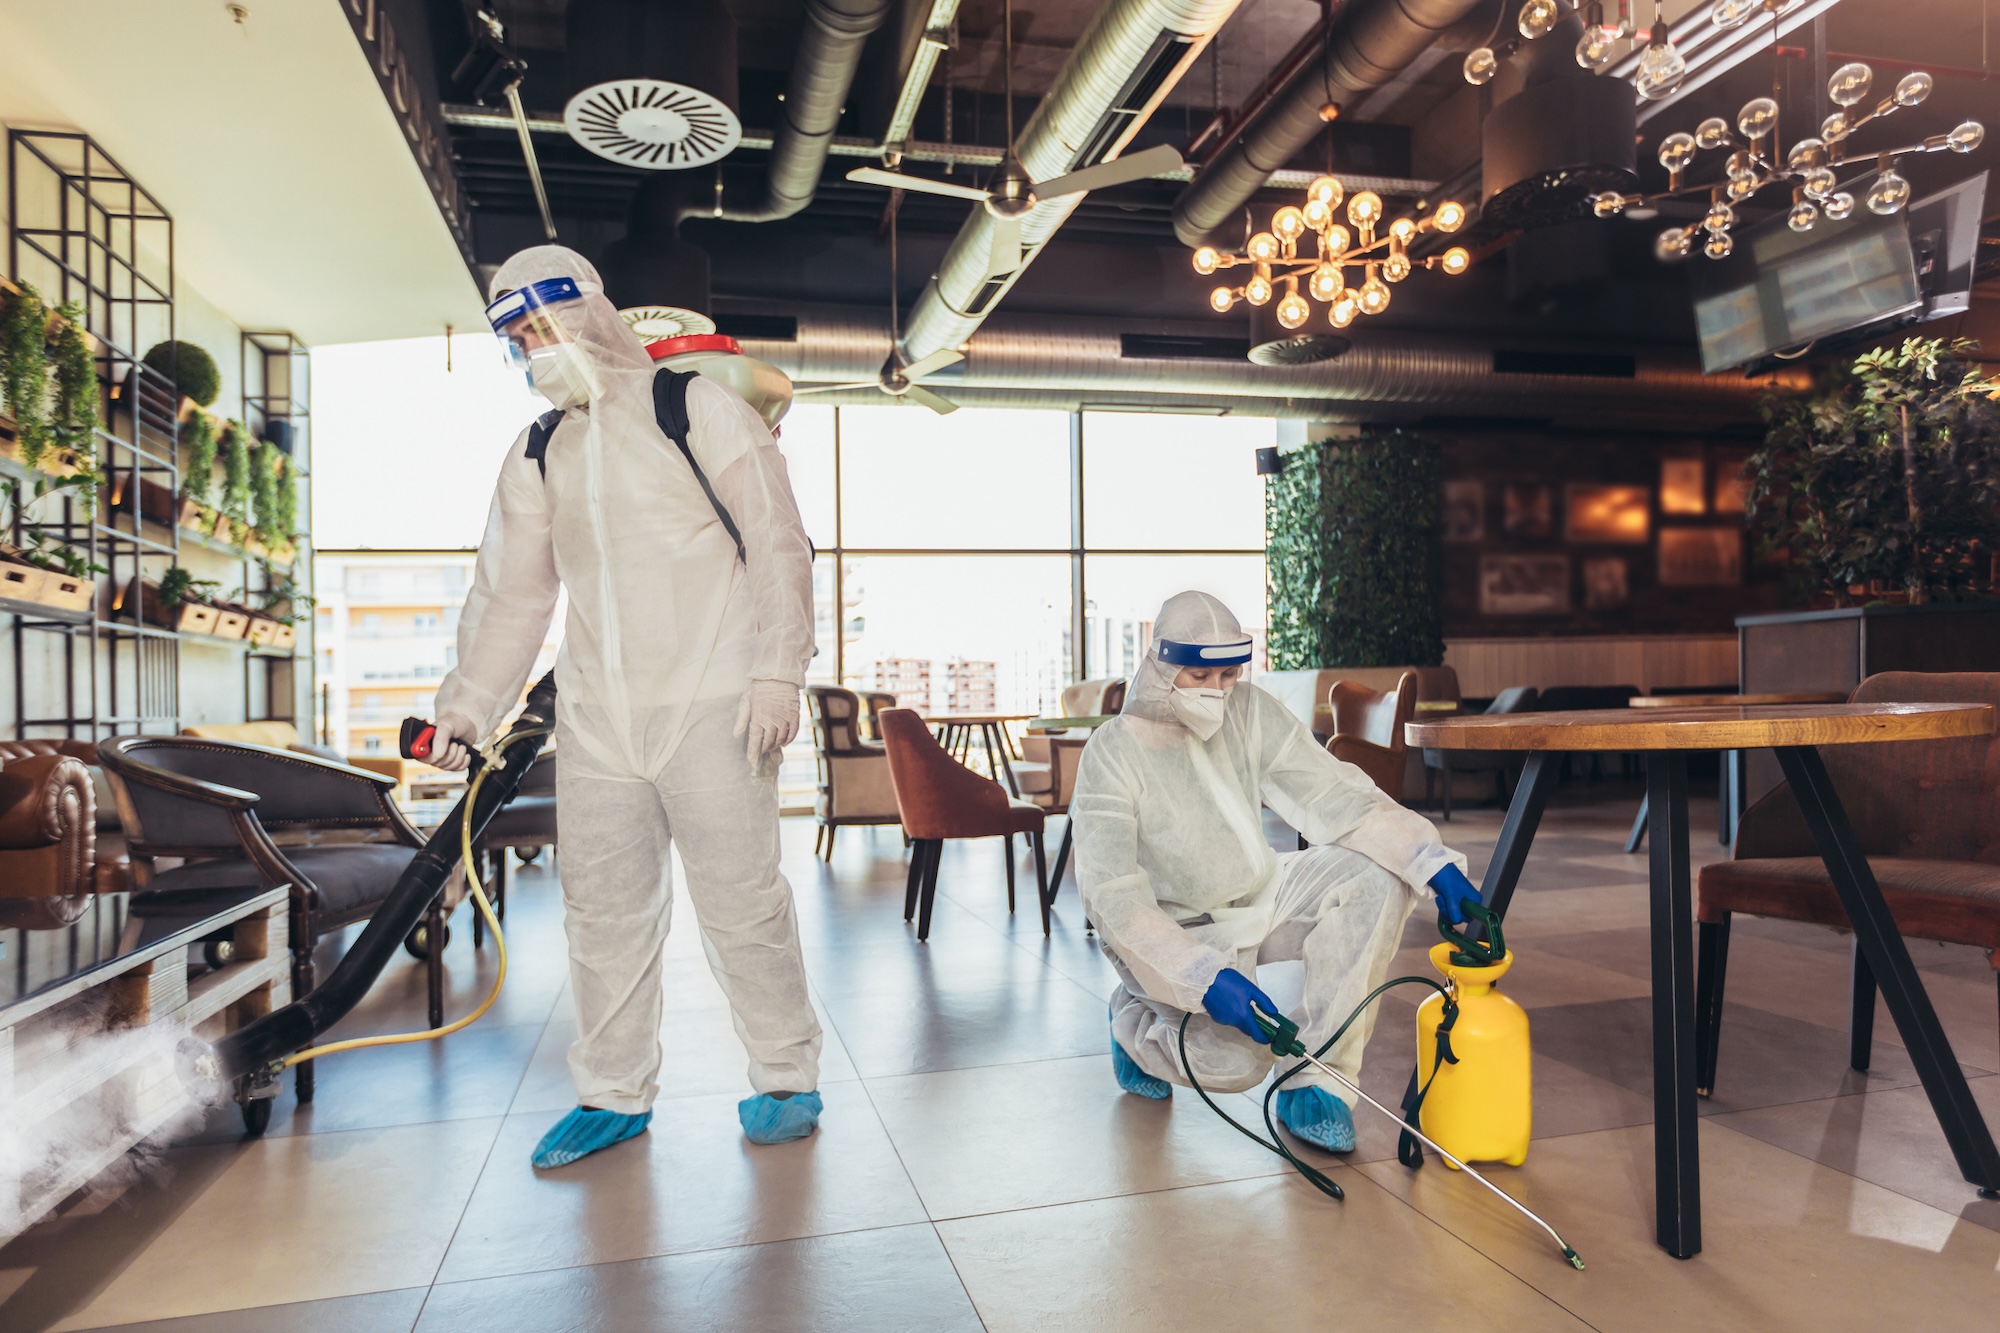 Professional workers in hazmat suits disinfecting indoor of cafe or restaurant, pandemic health risk, coronavirus